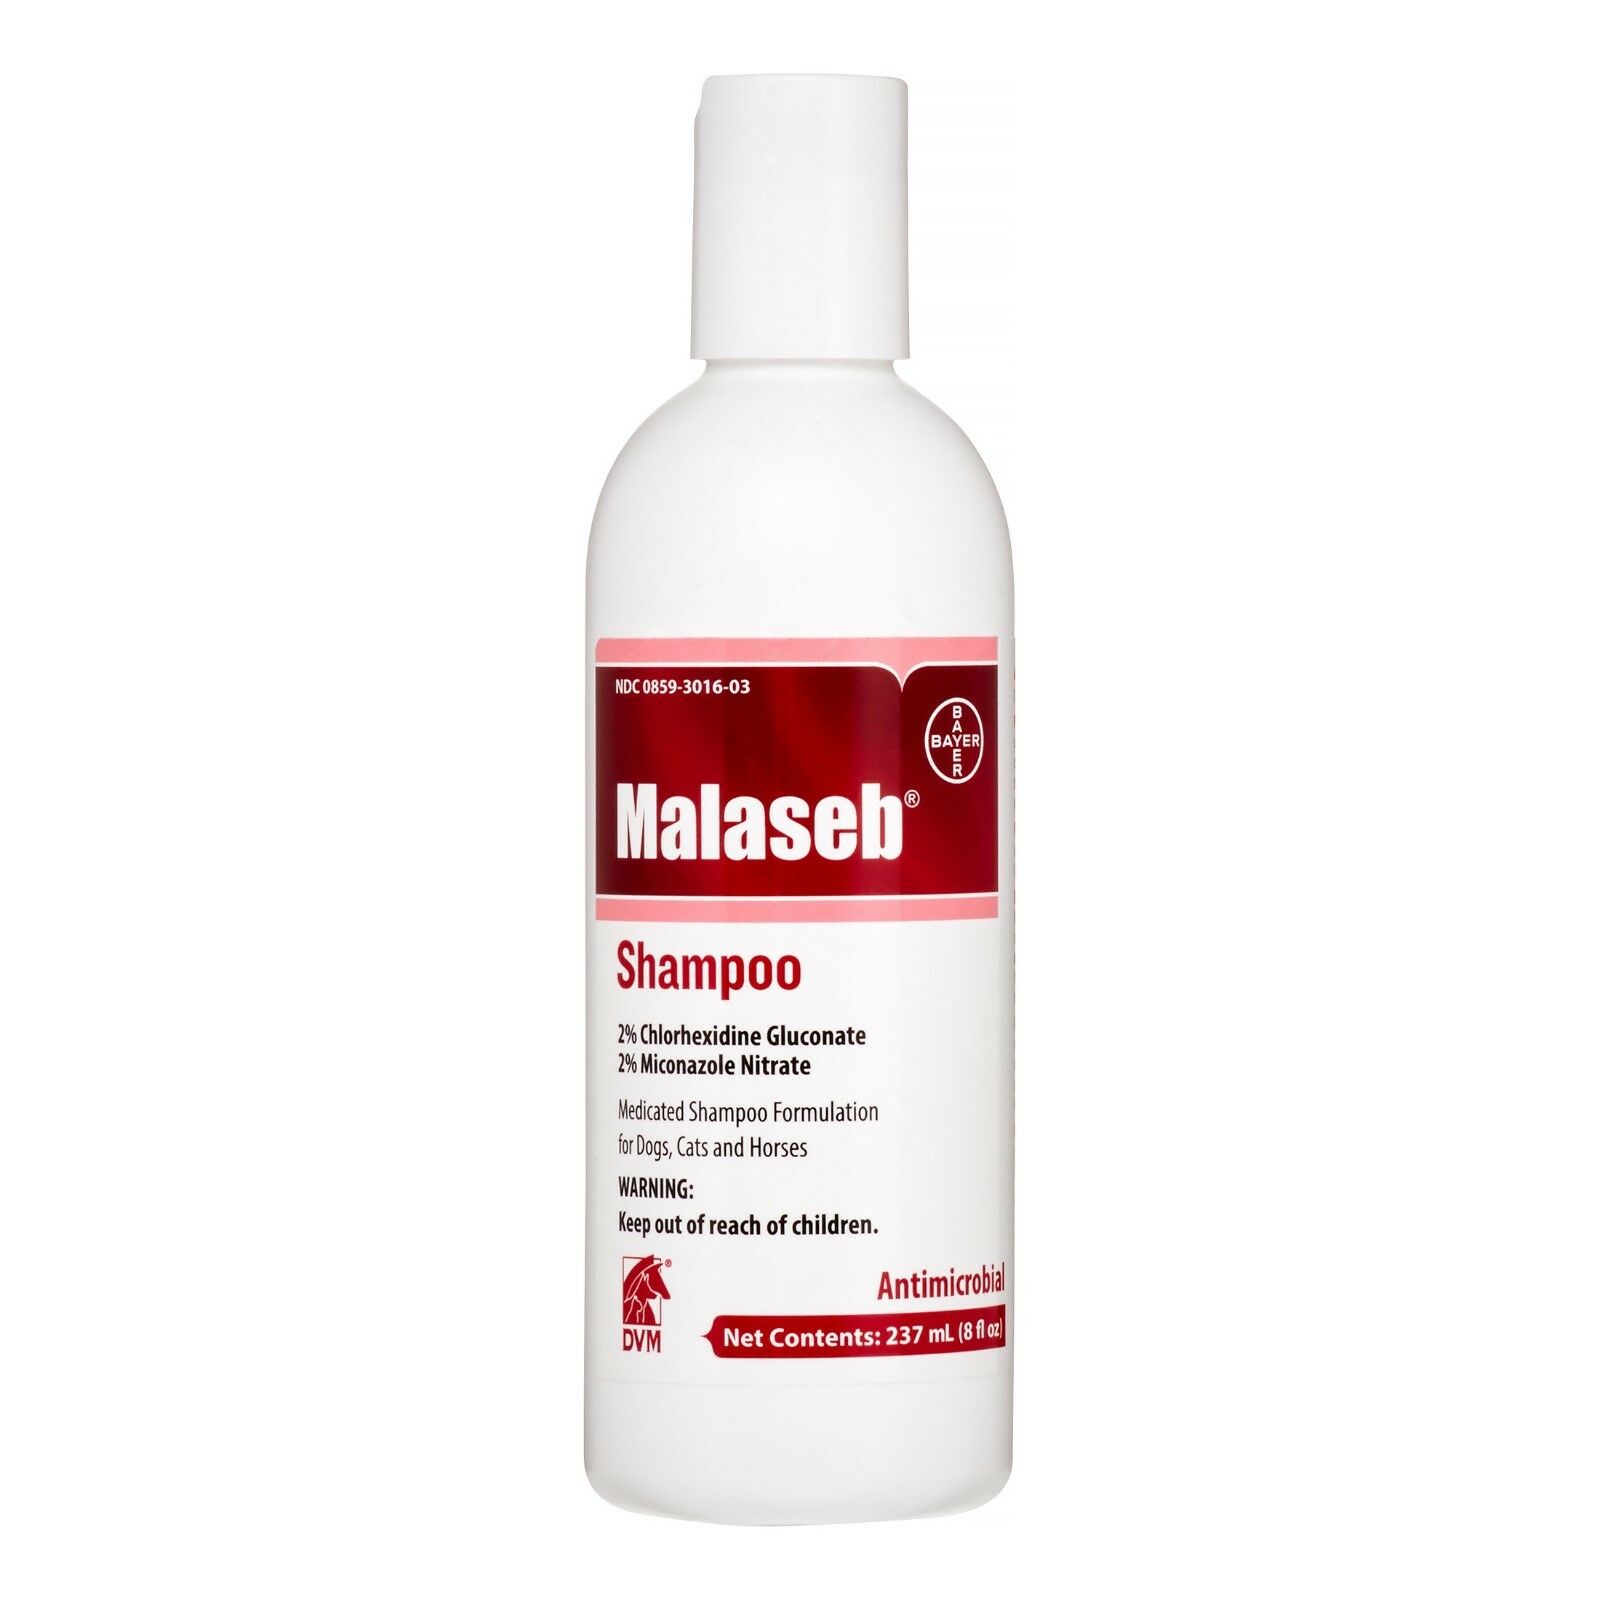 Malaseb Shampoo Medicated Shampoo Formulation For Dogs, Cats, And Horses - 8 Oz